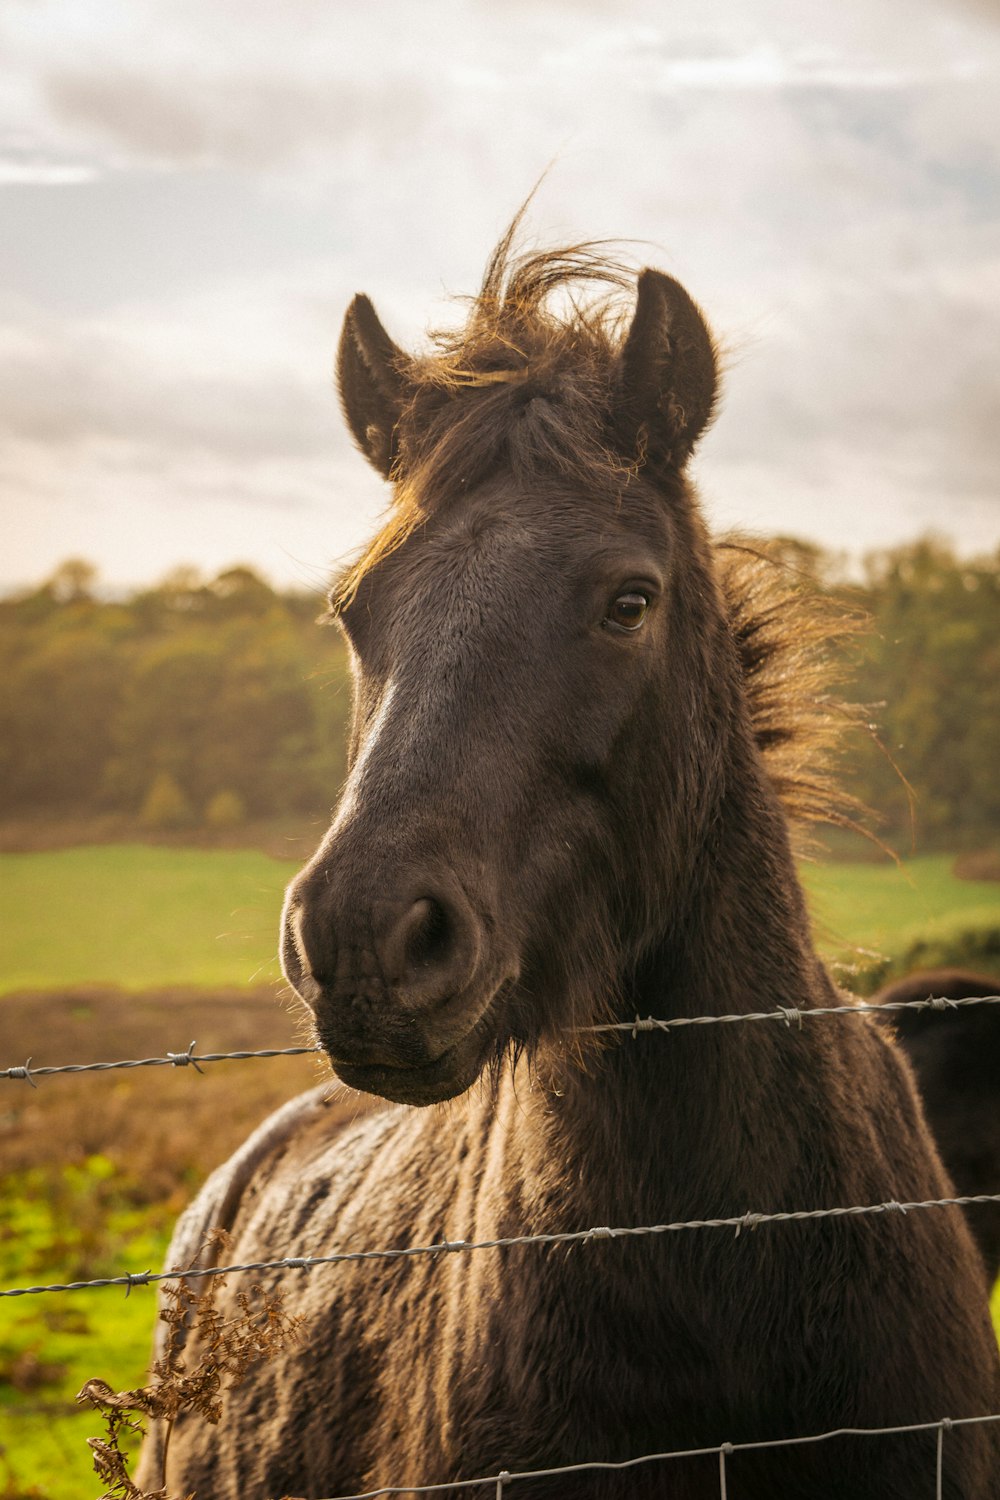 a horse behind a fence